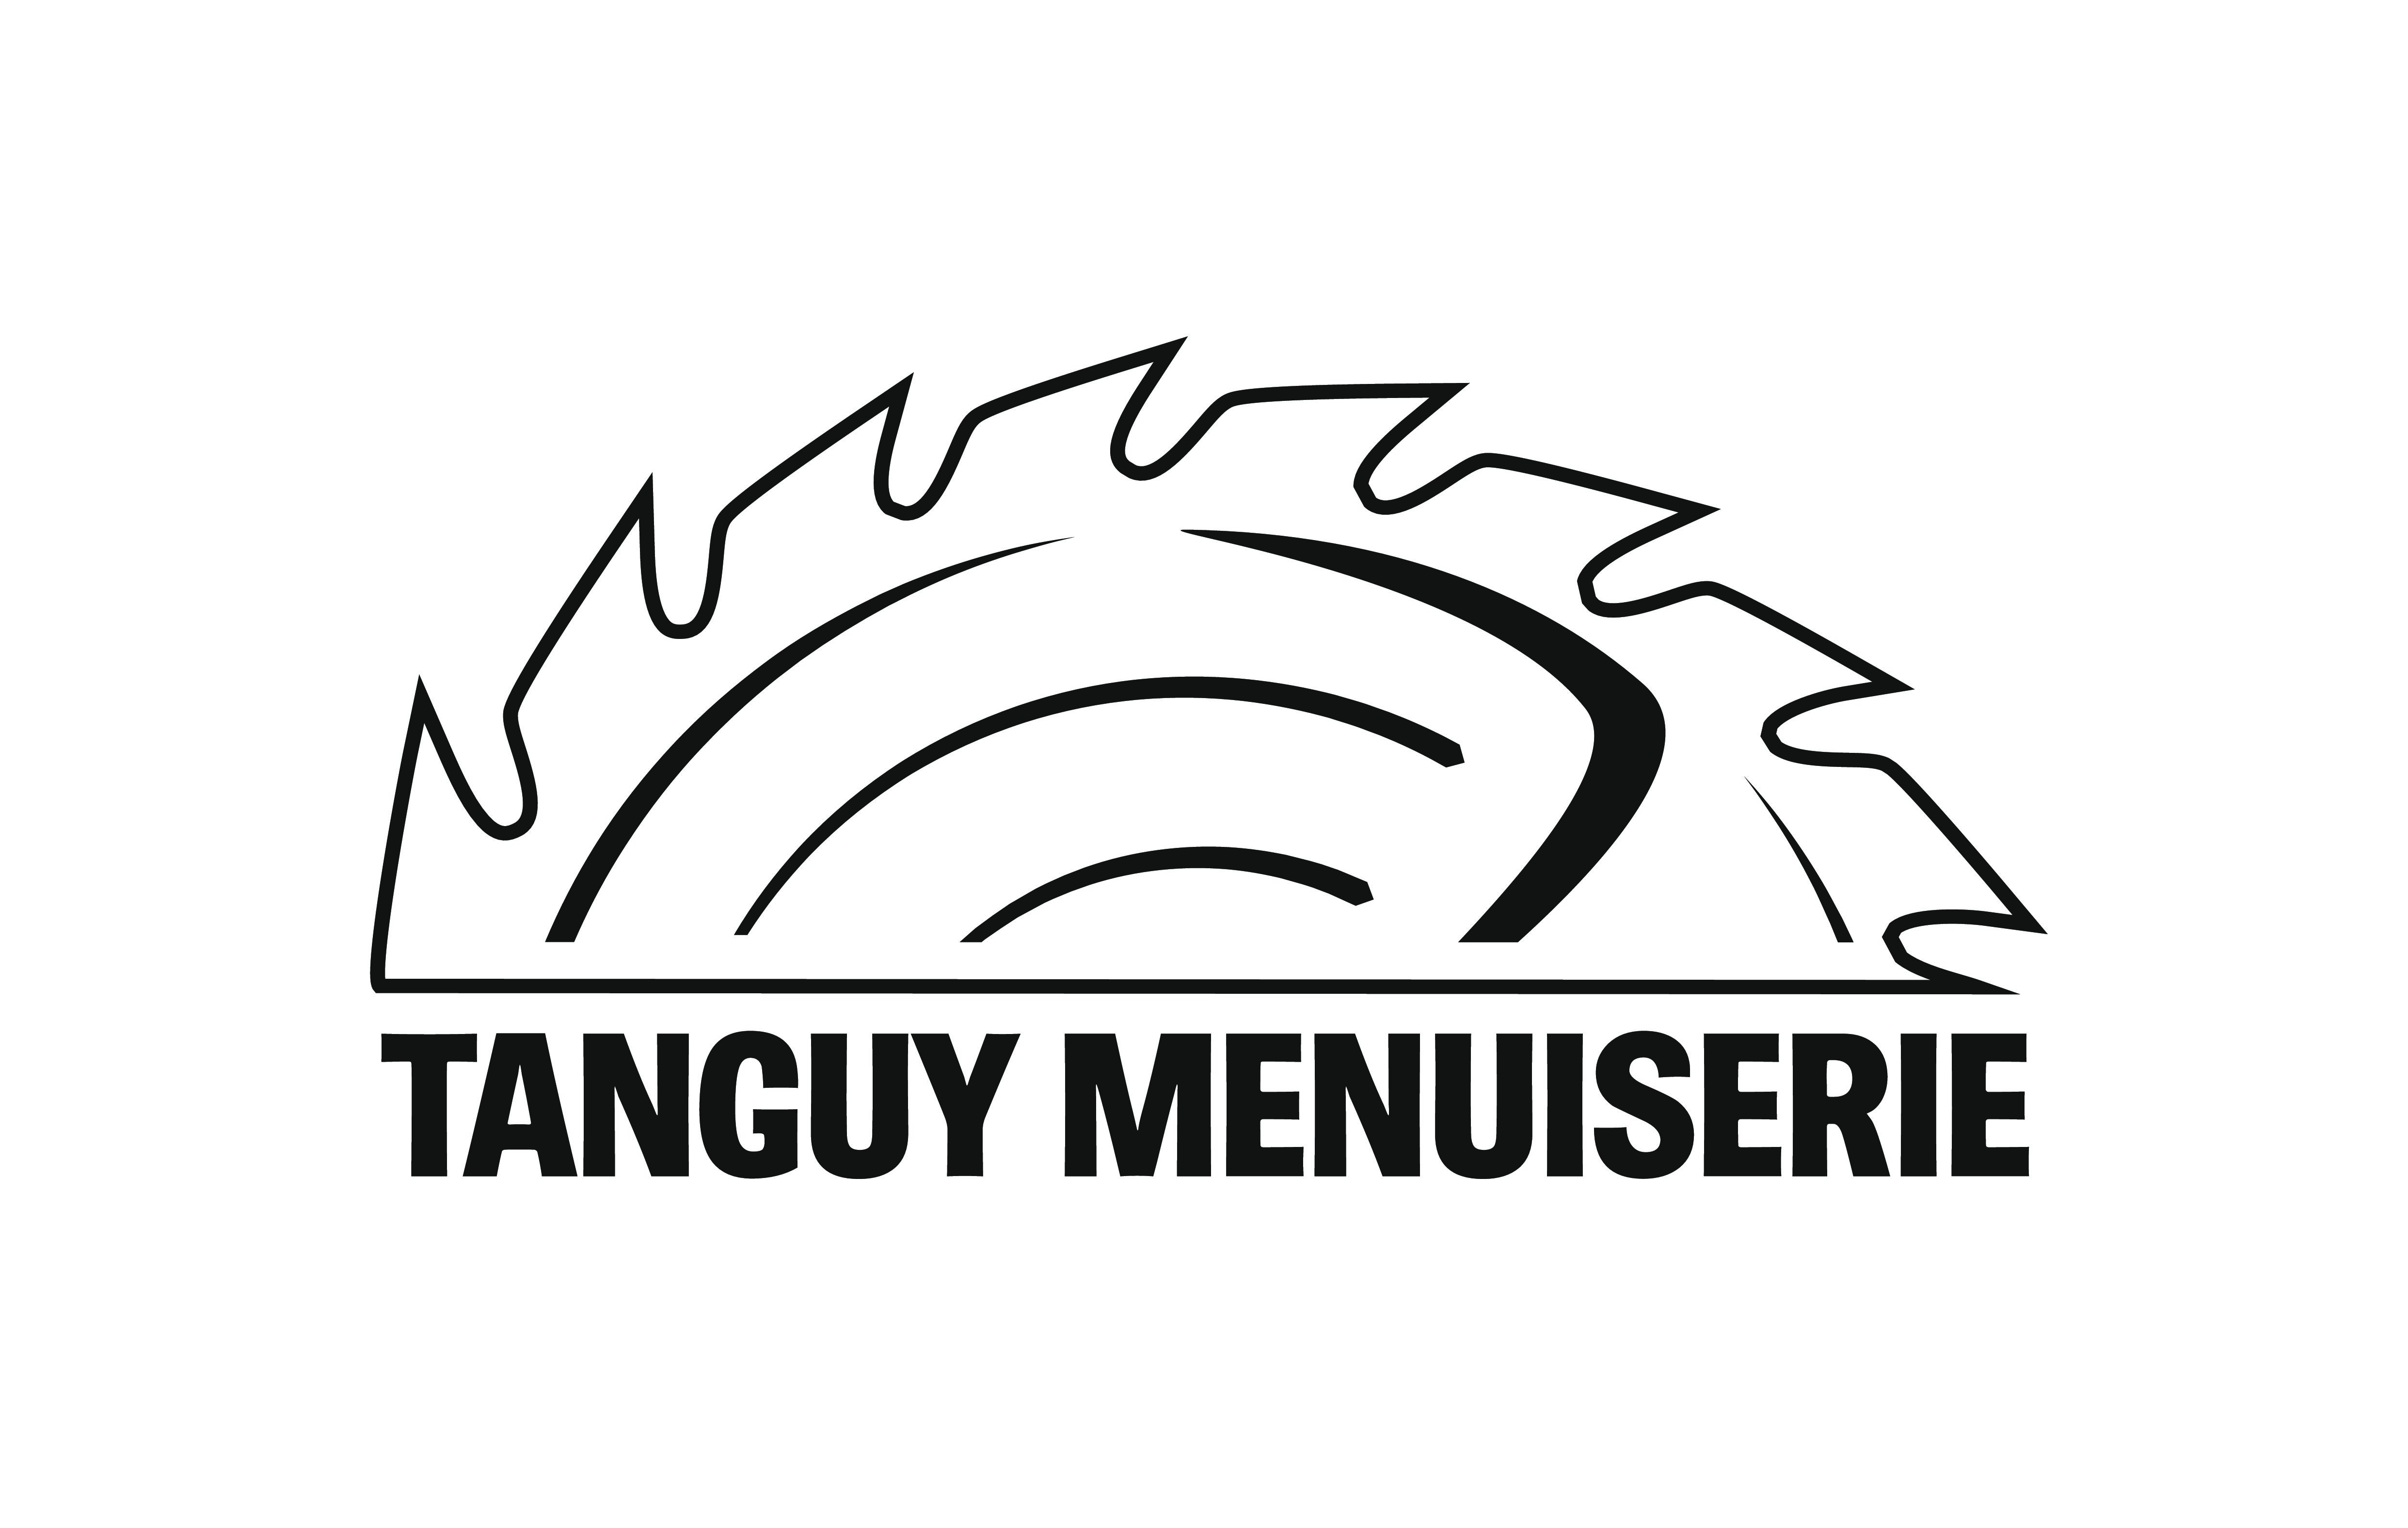 Tanguy Menuiserie